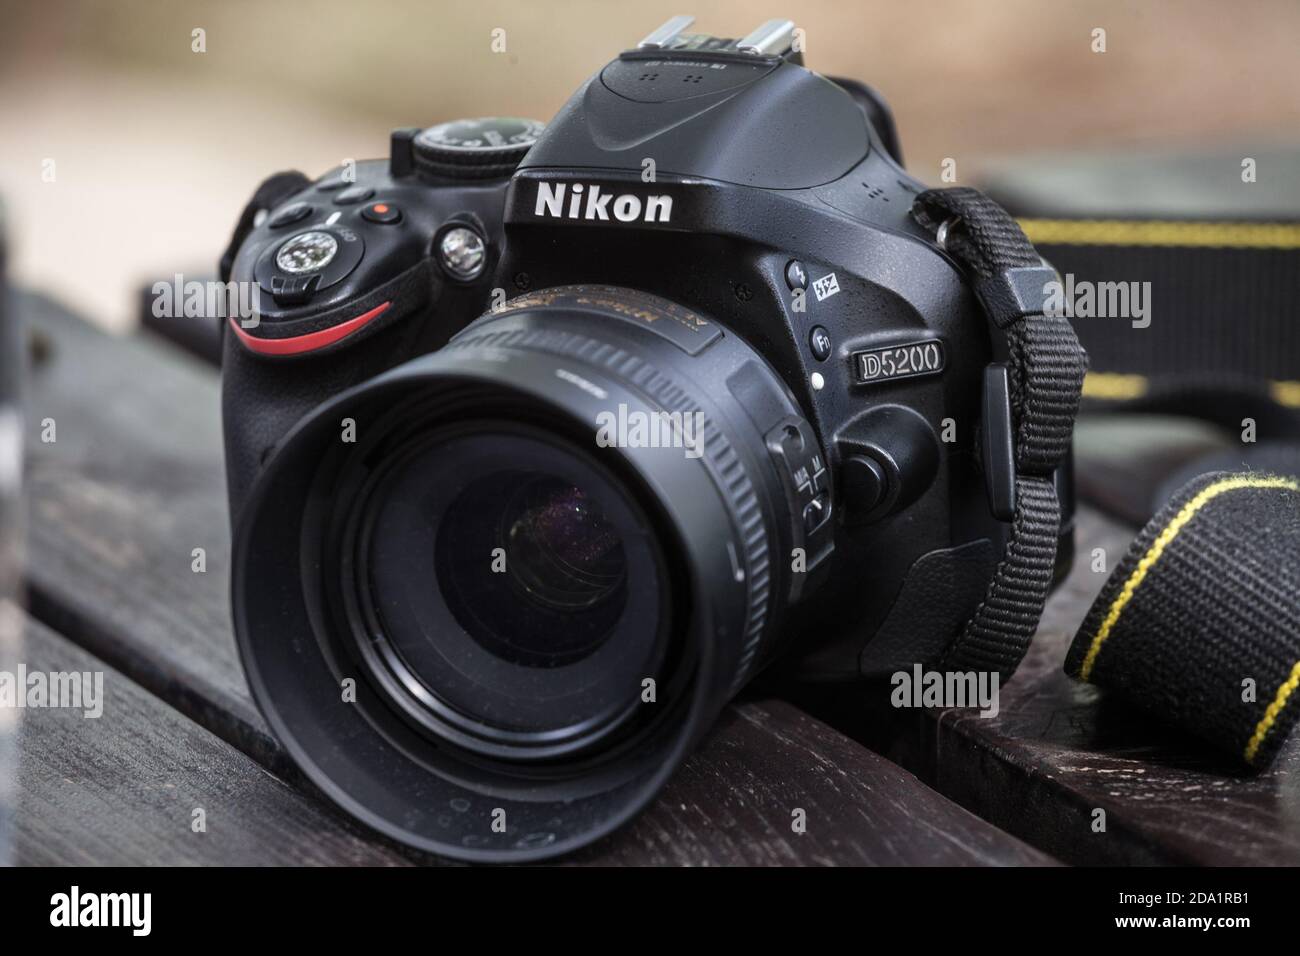 BELGRADO, SERBIA - 3 DE OCTUBRE de 2020: Nikon D5200 montada con un objetivo Nikkor Prime de 50 mm en la pantalla sobre una mesa de madera. D5200 es una réflex digital APS C, entrada Foto de stock